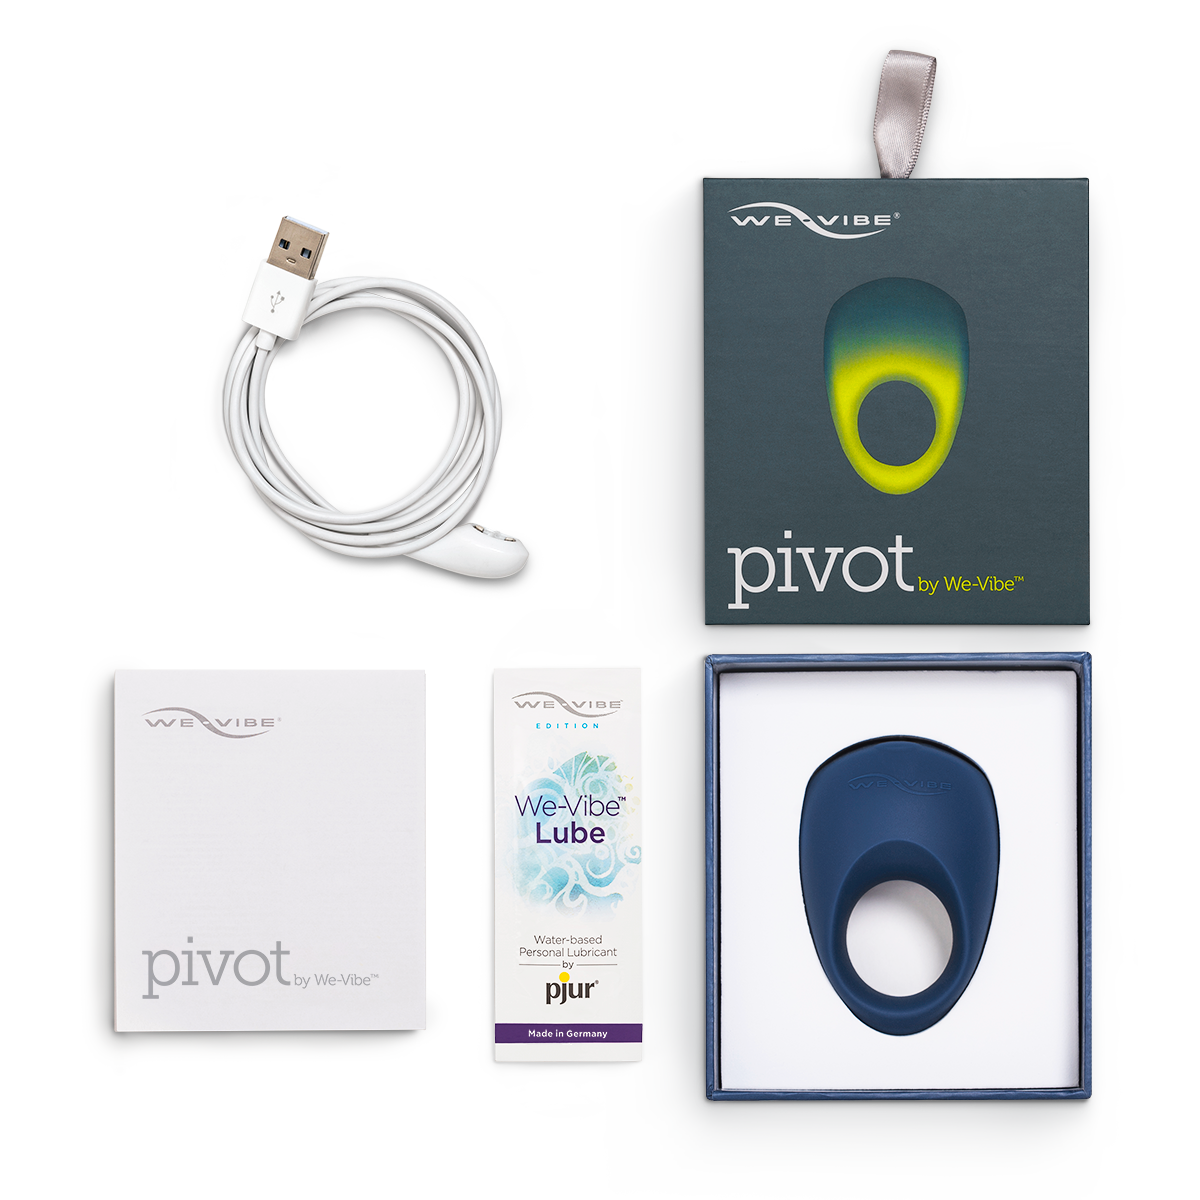 We-Vibe Pivot with box contents